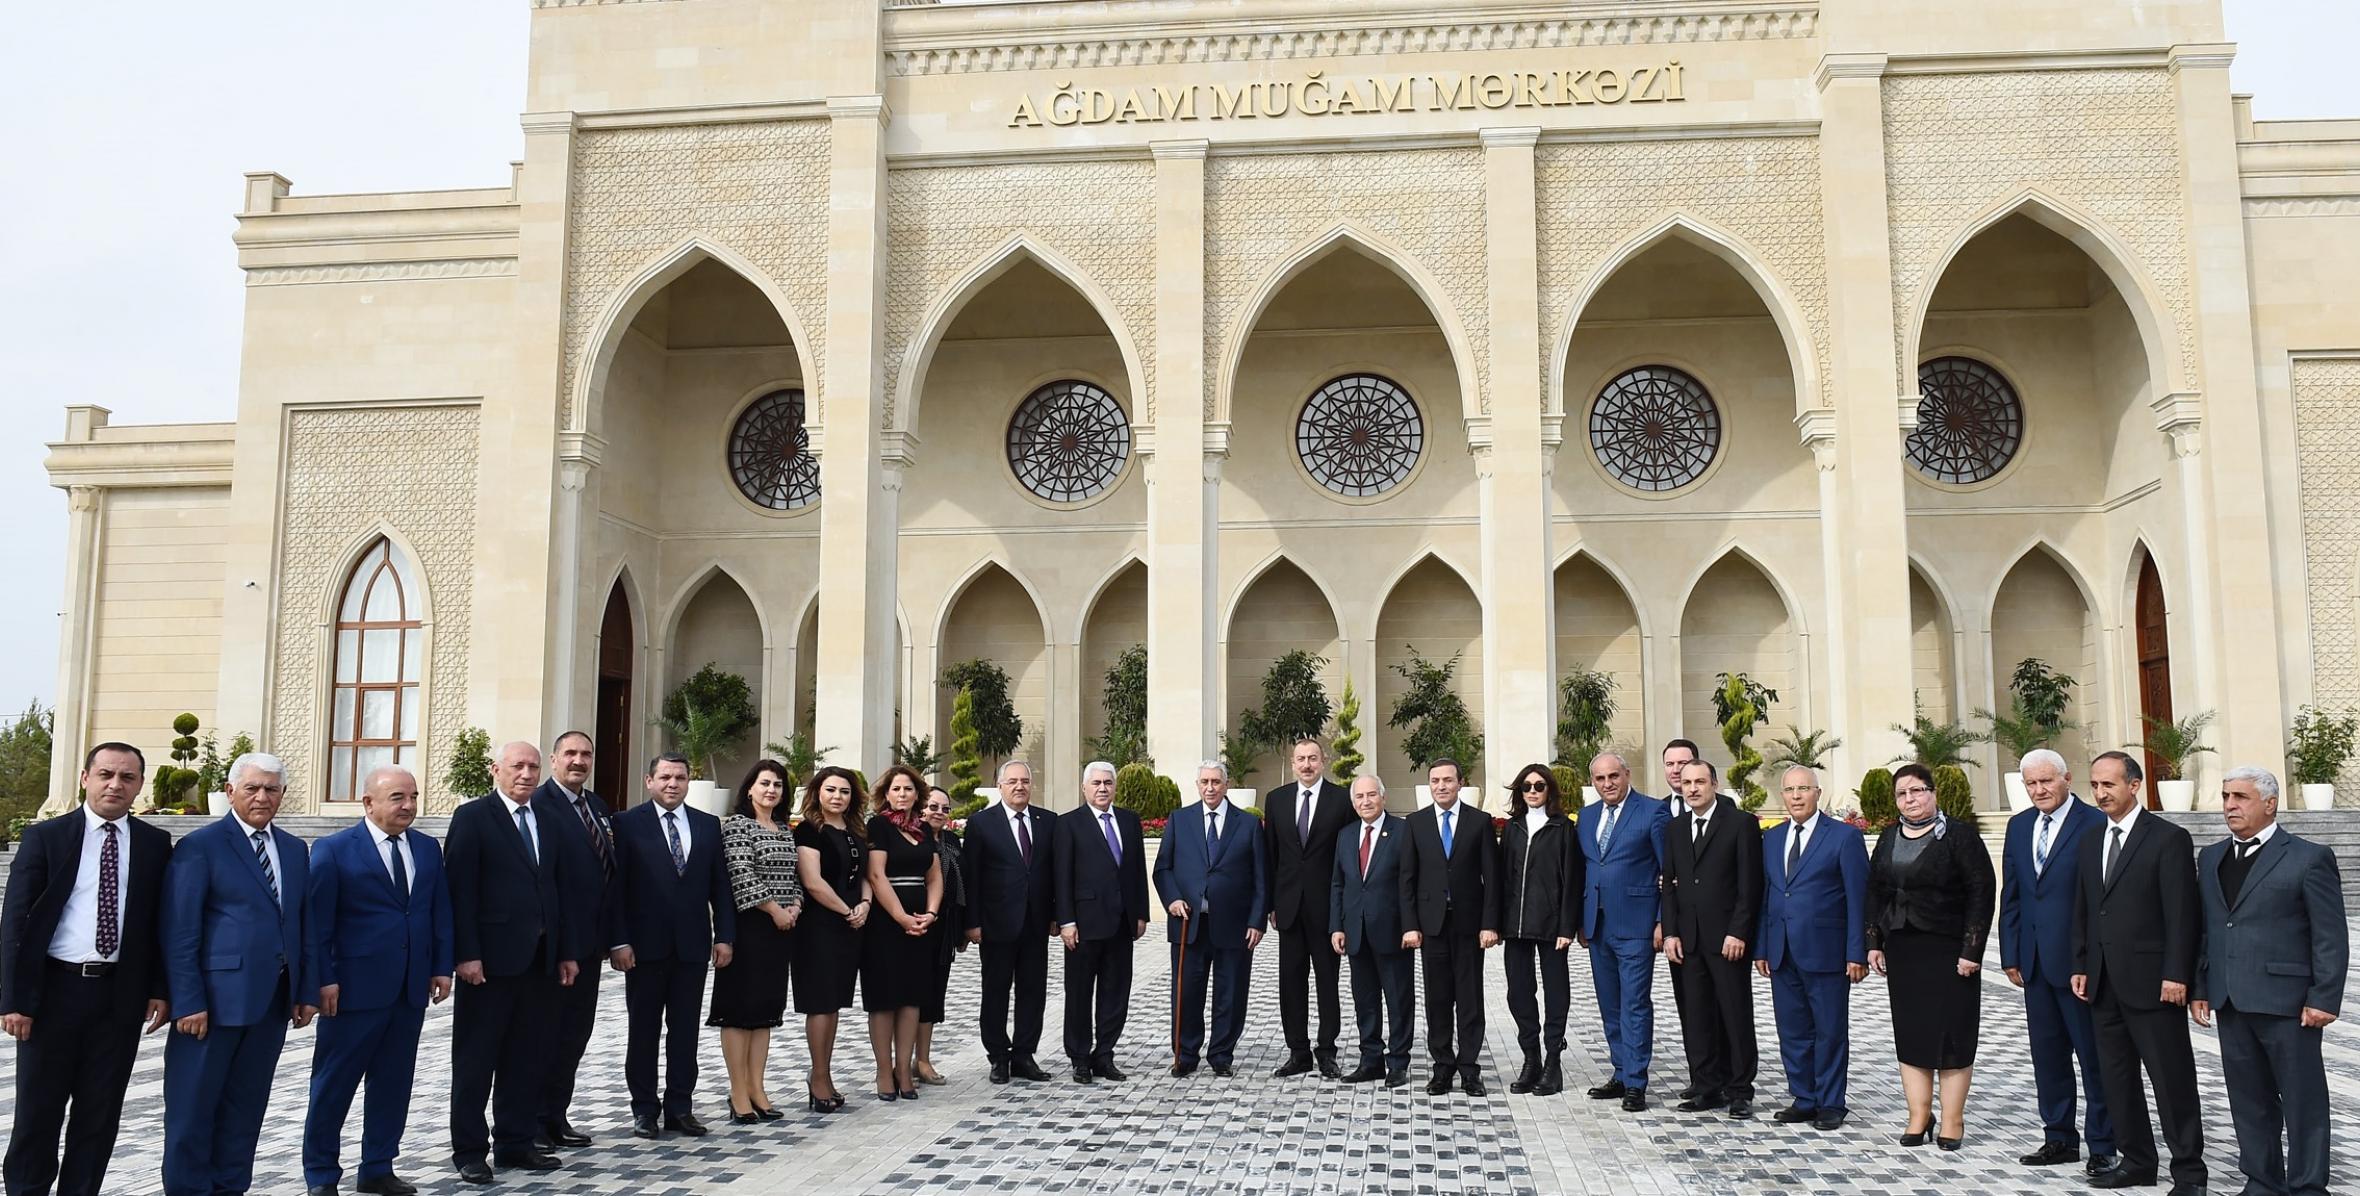 Ilham Aliyev inaugurated Aghdam Mugham Center